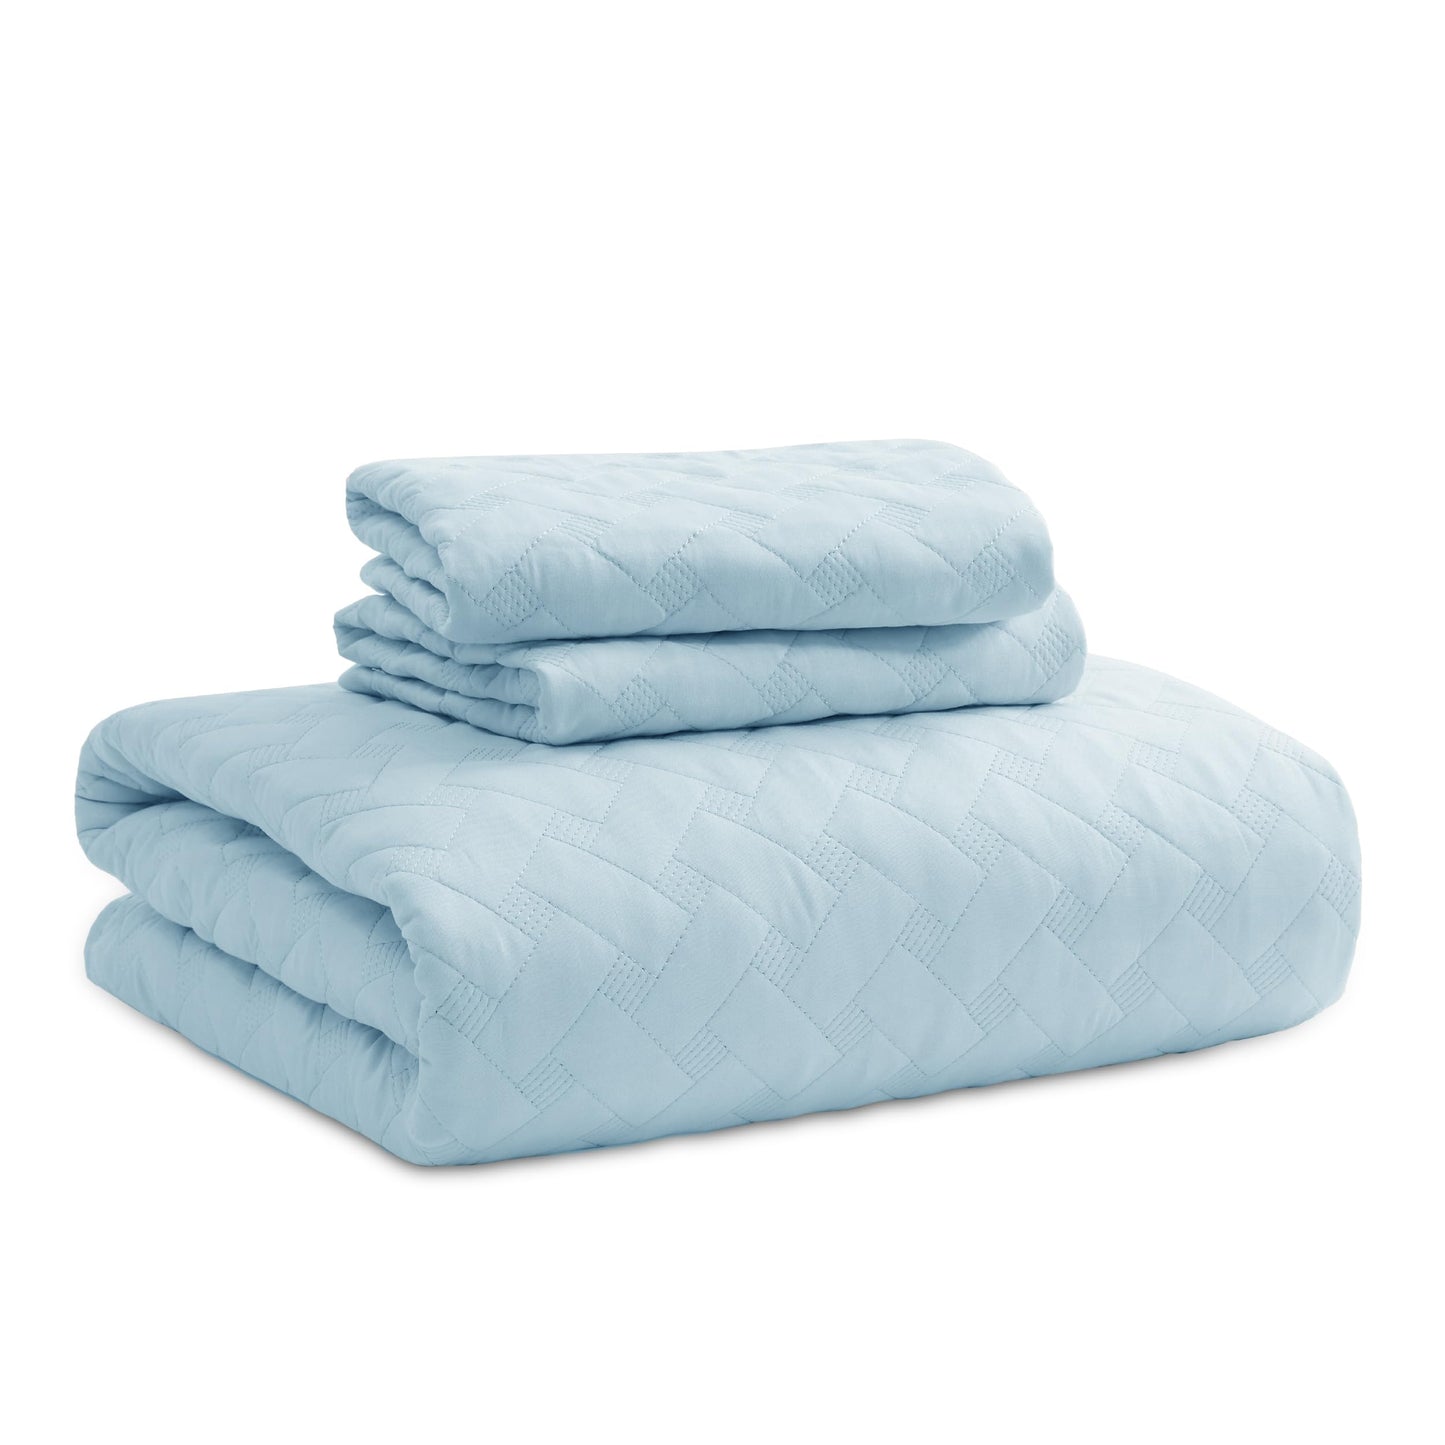 Bedsure Queen Quilt Bedding Set - Lightweight Spring Quilt Full/Queen - Sky Blue Bedspread Queen Size - Bedding Coverlet for All Seasons (Includes 1 Quilt, 2 Pillow Shams)